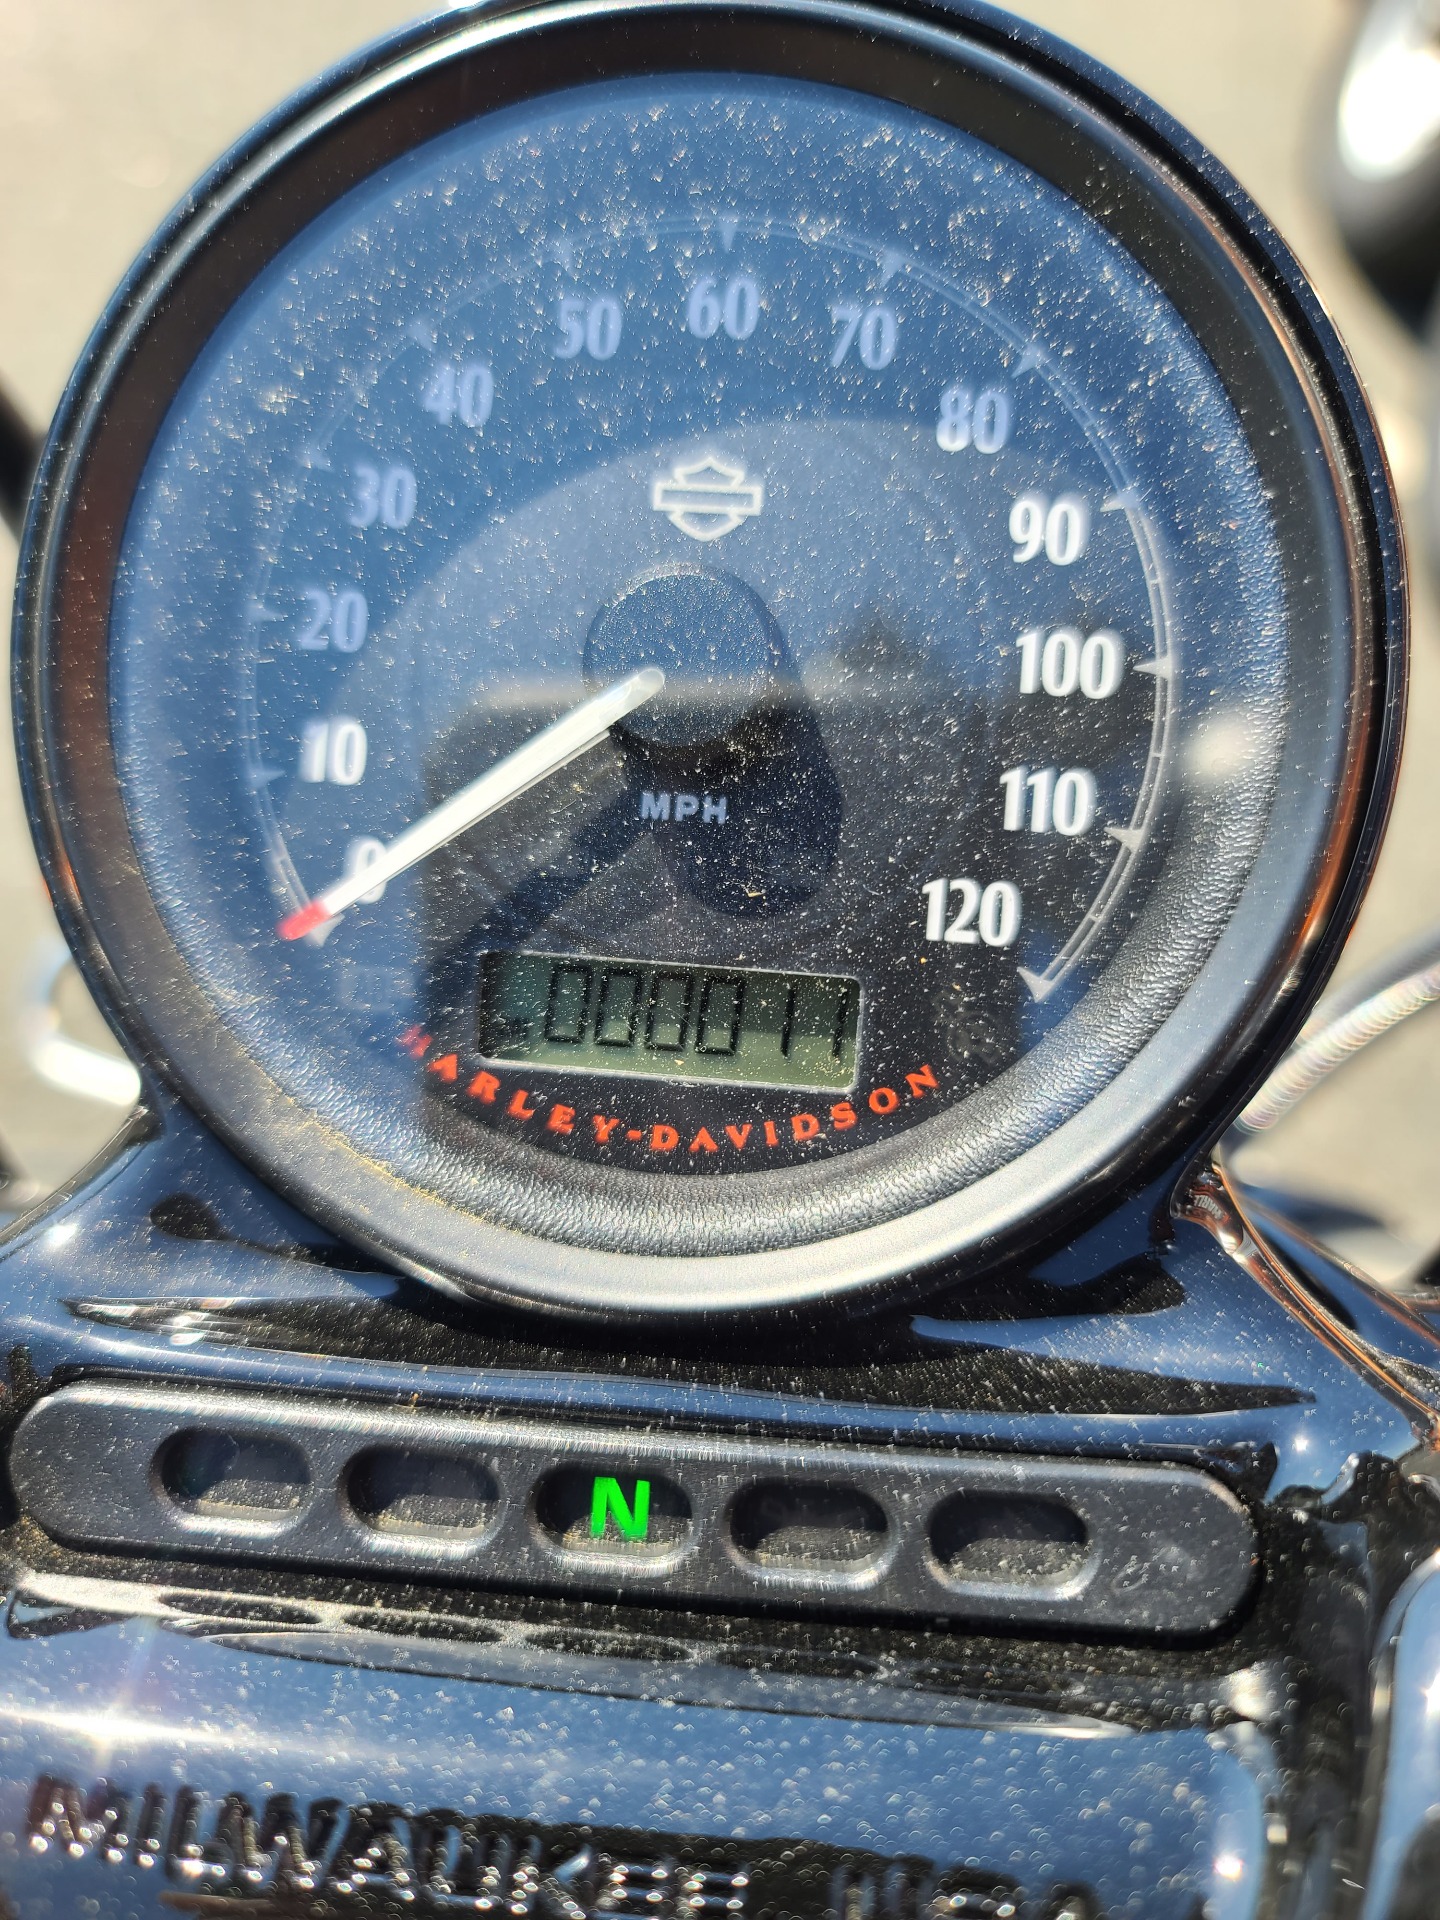 2021 Harley-Davidson Forty-Eight® in Fredericksburg, Virginia - Photo 8